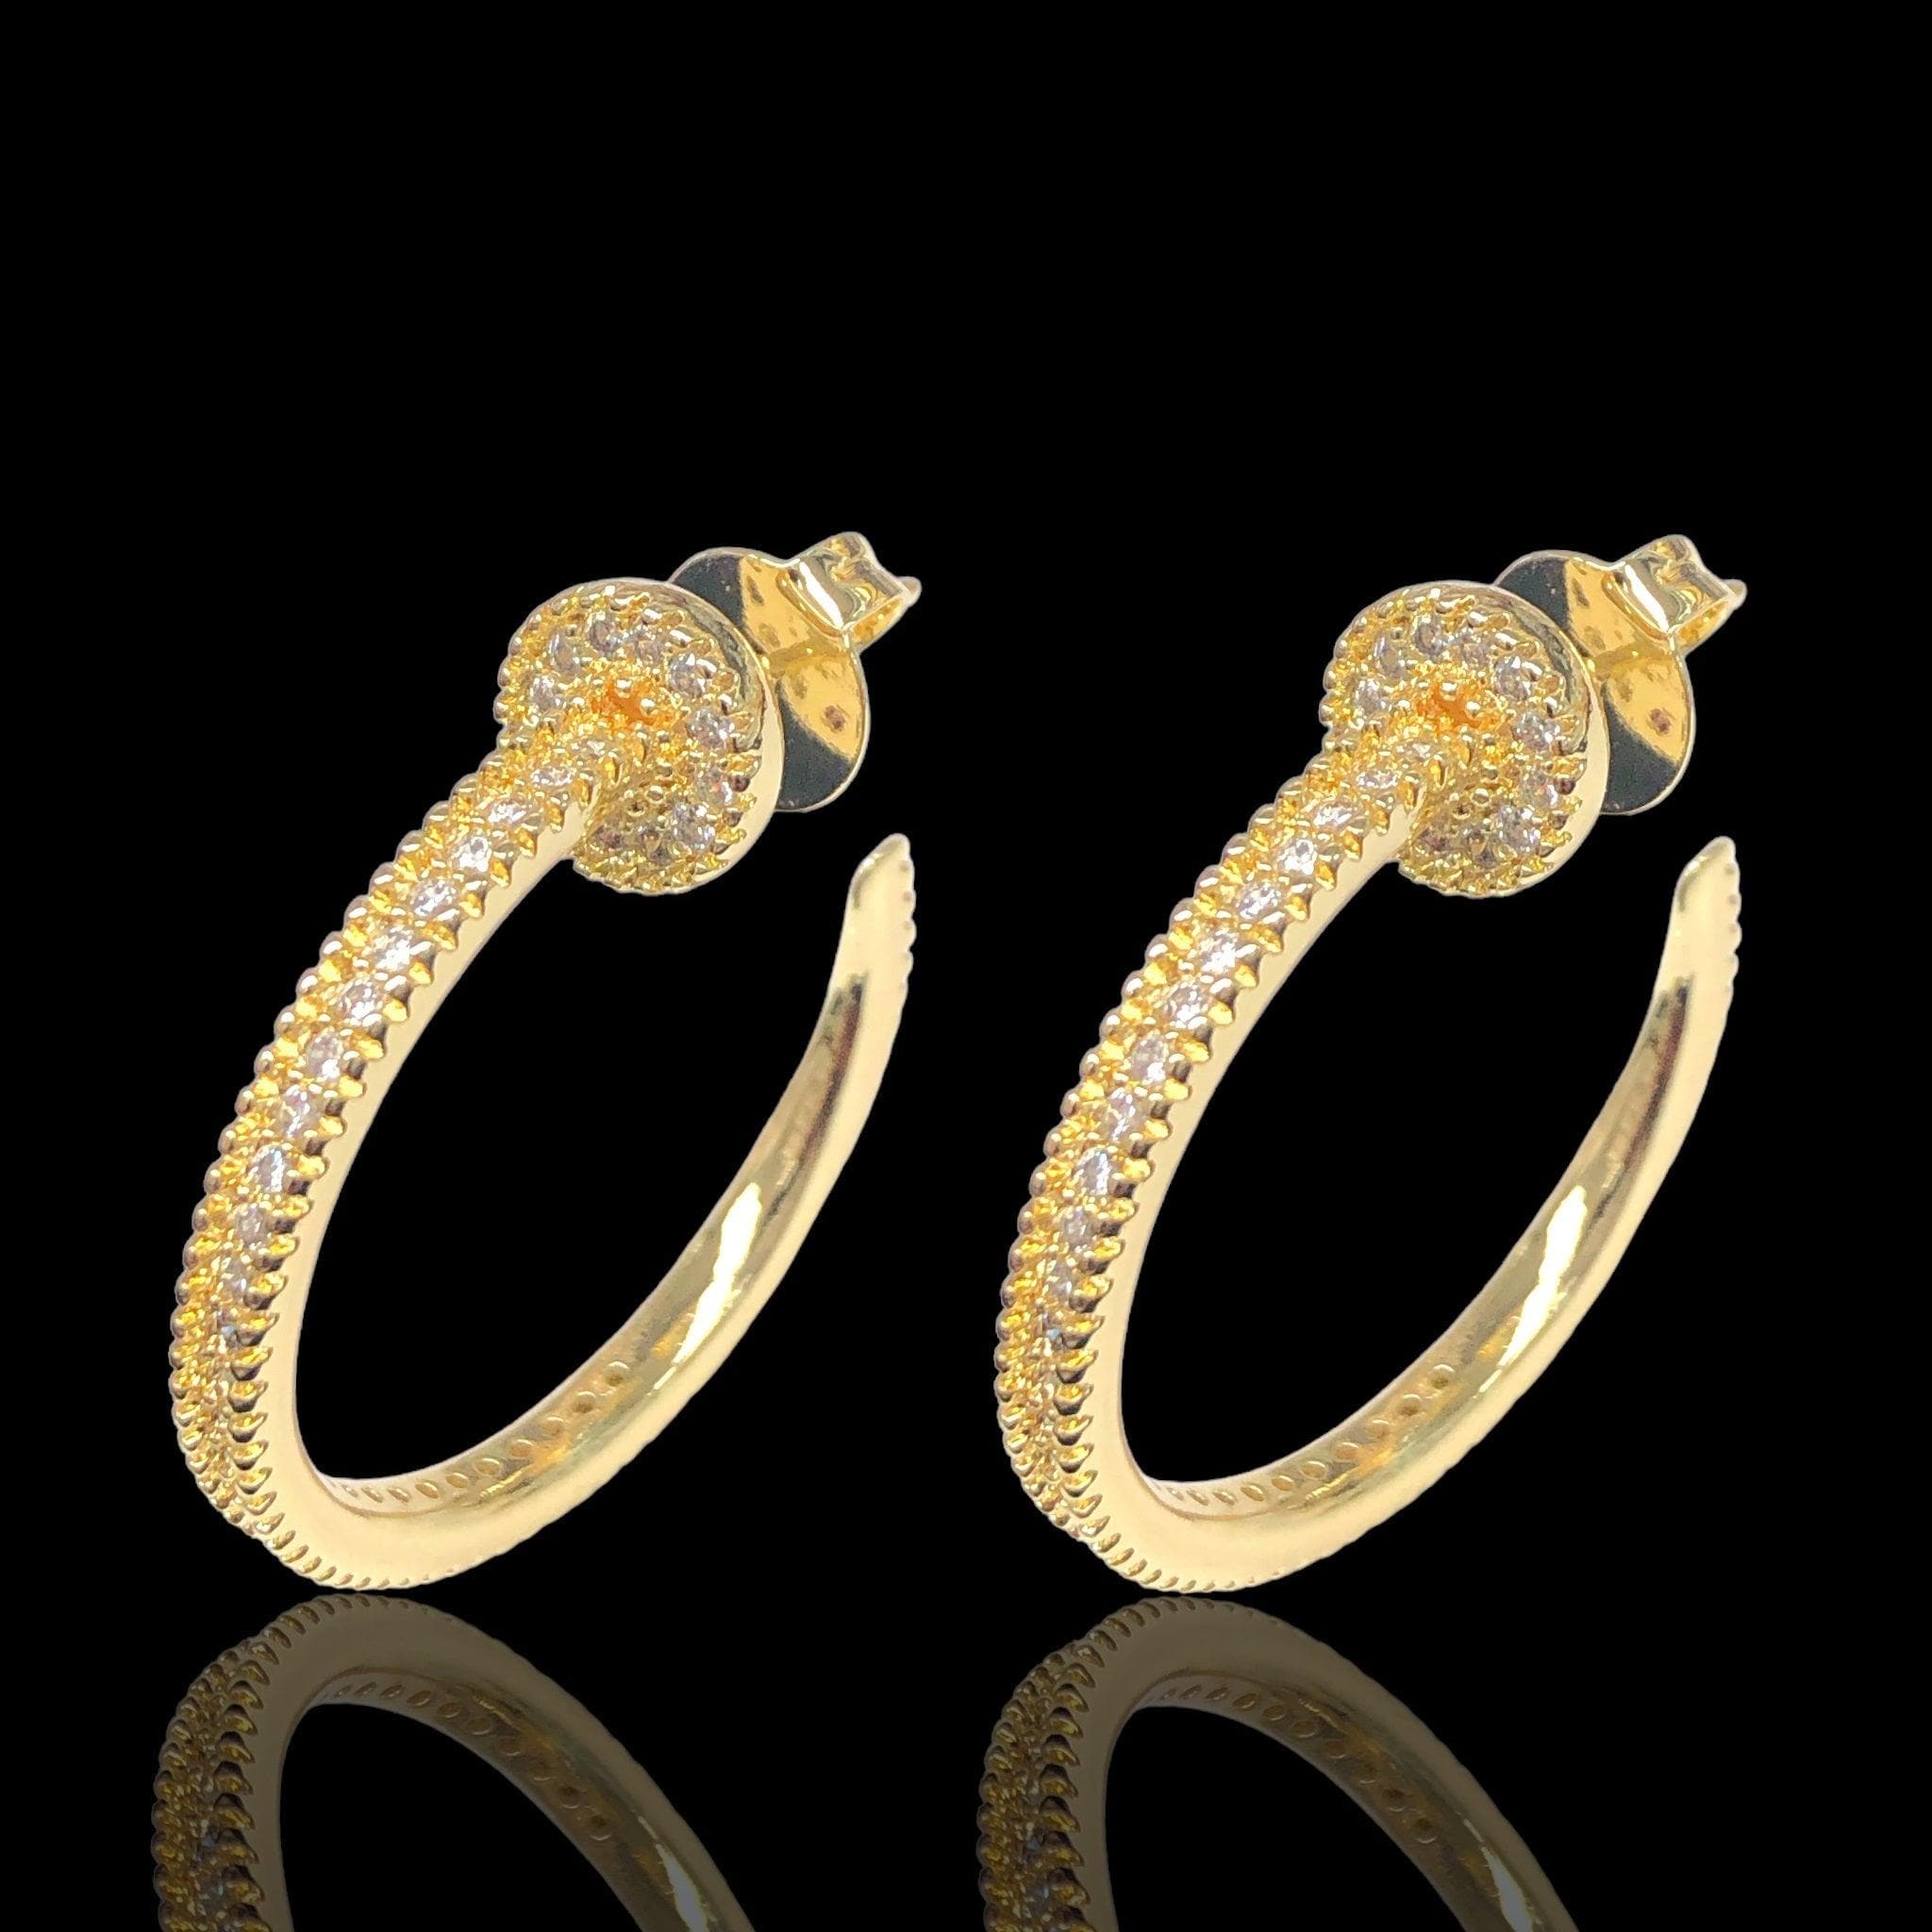 OLE 0559 -18K Gold Filled Oro Laminado EARRINGS, NEW - KUANIA